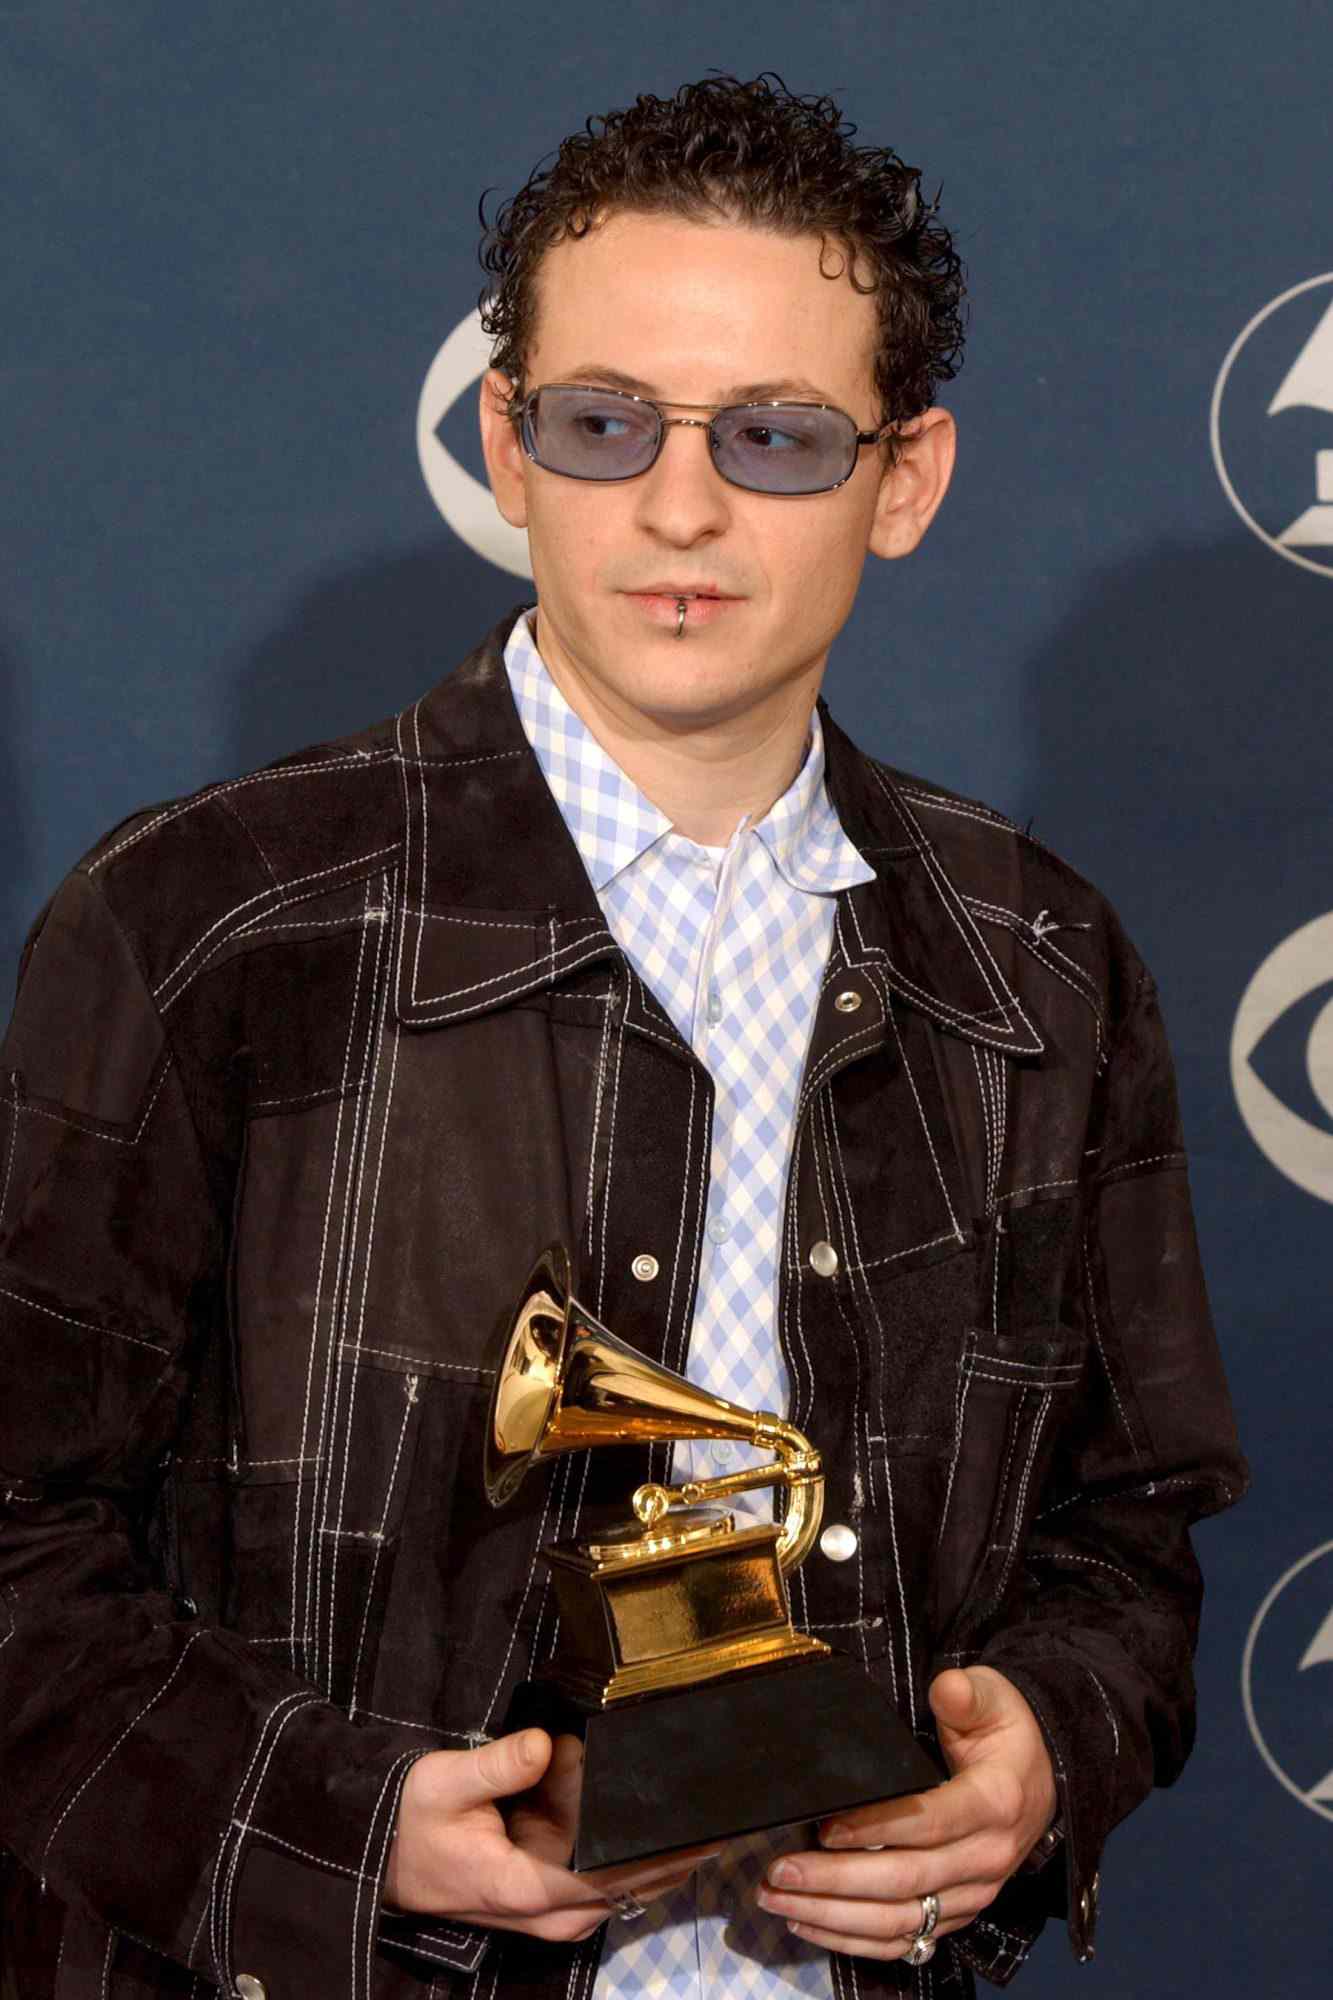 44th Annual Grammy Awards